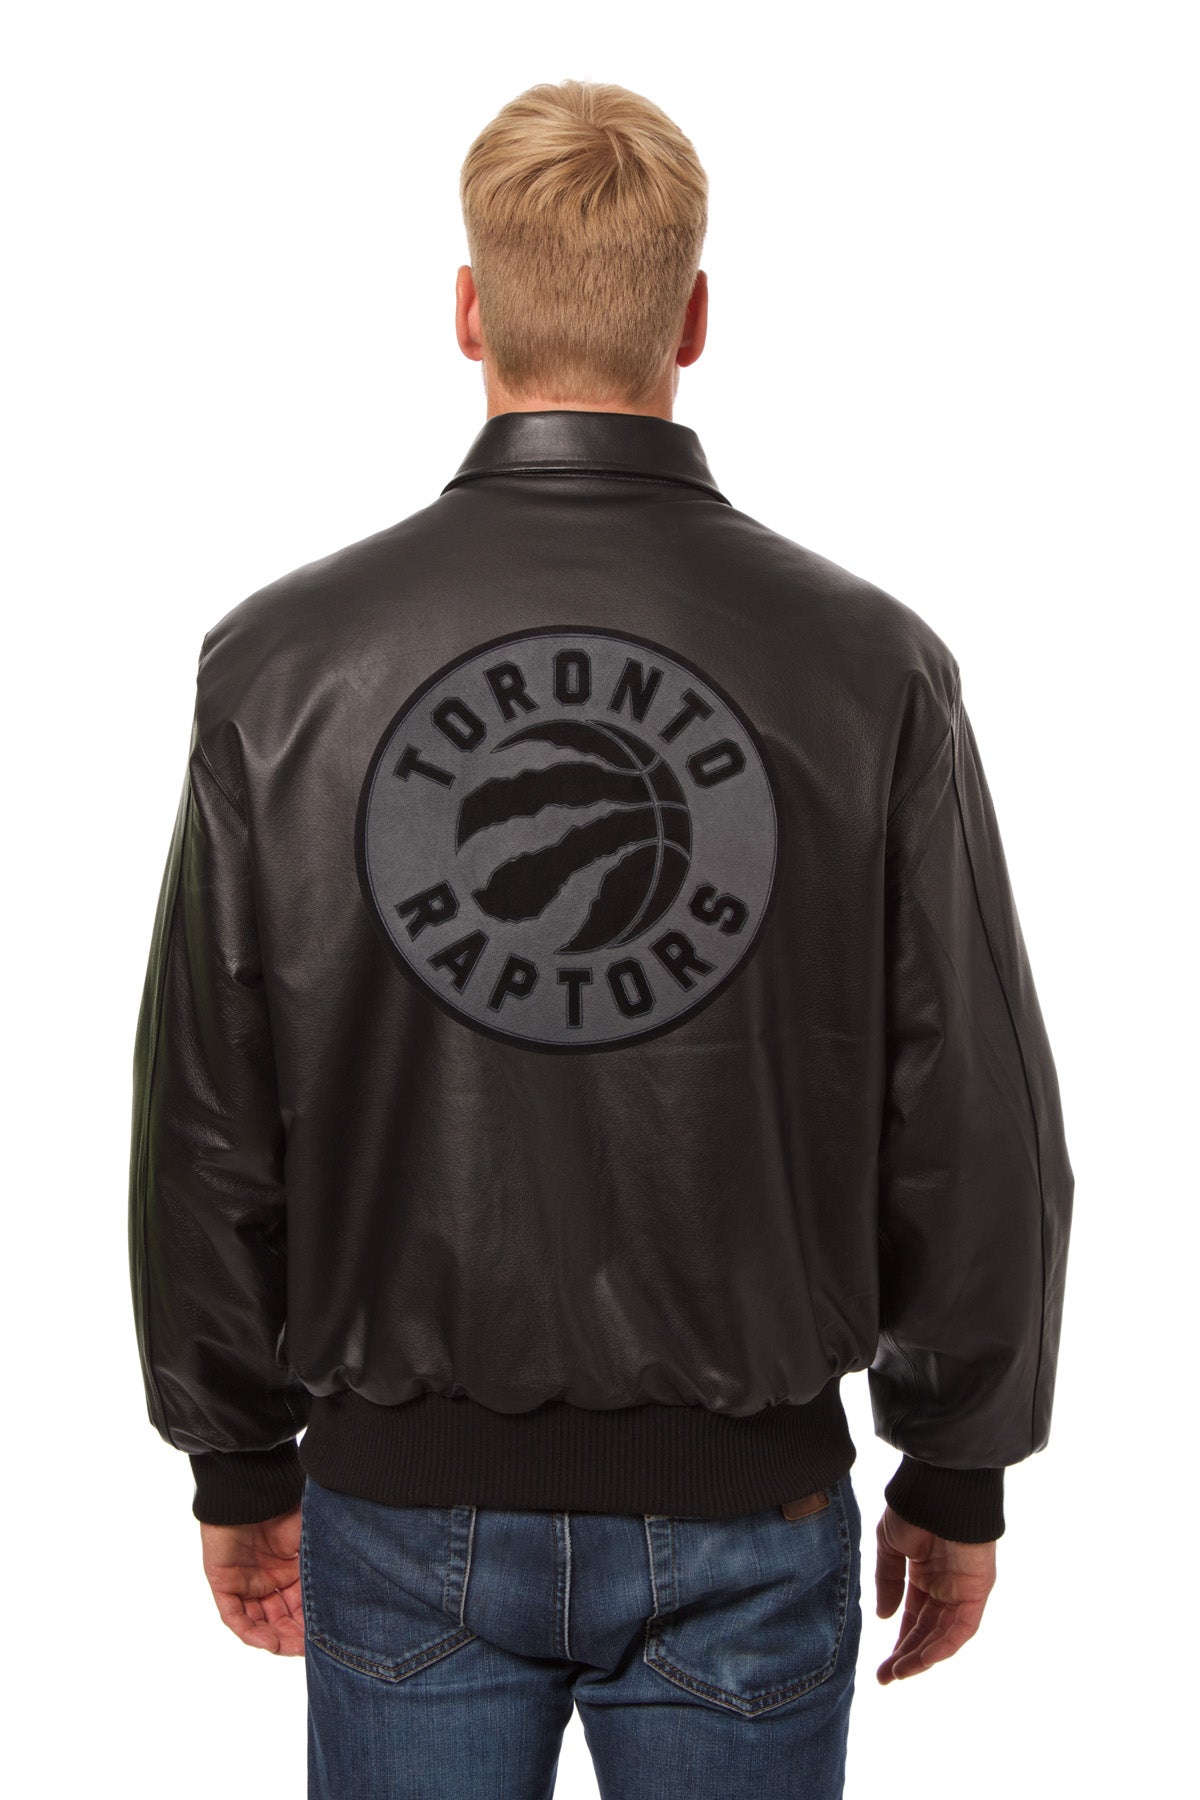 toronto raptors leather jacket